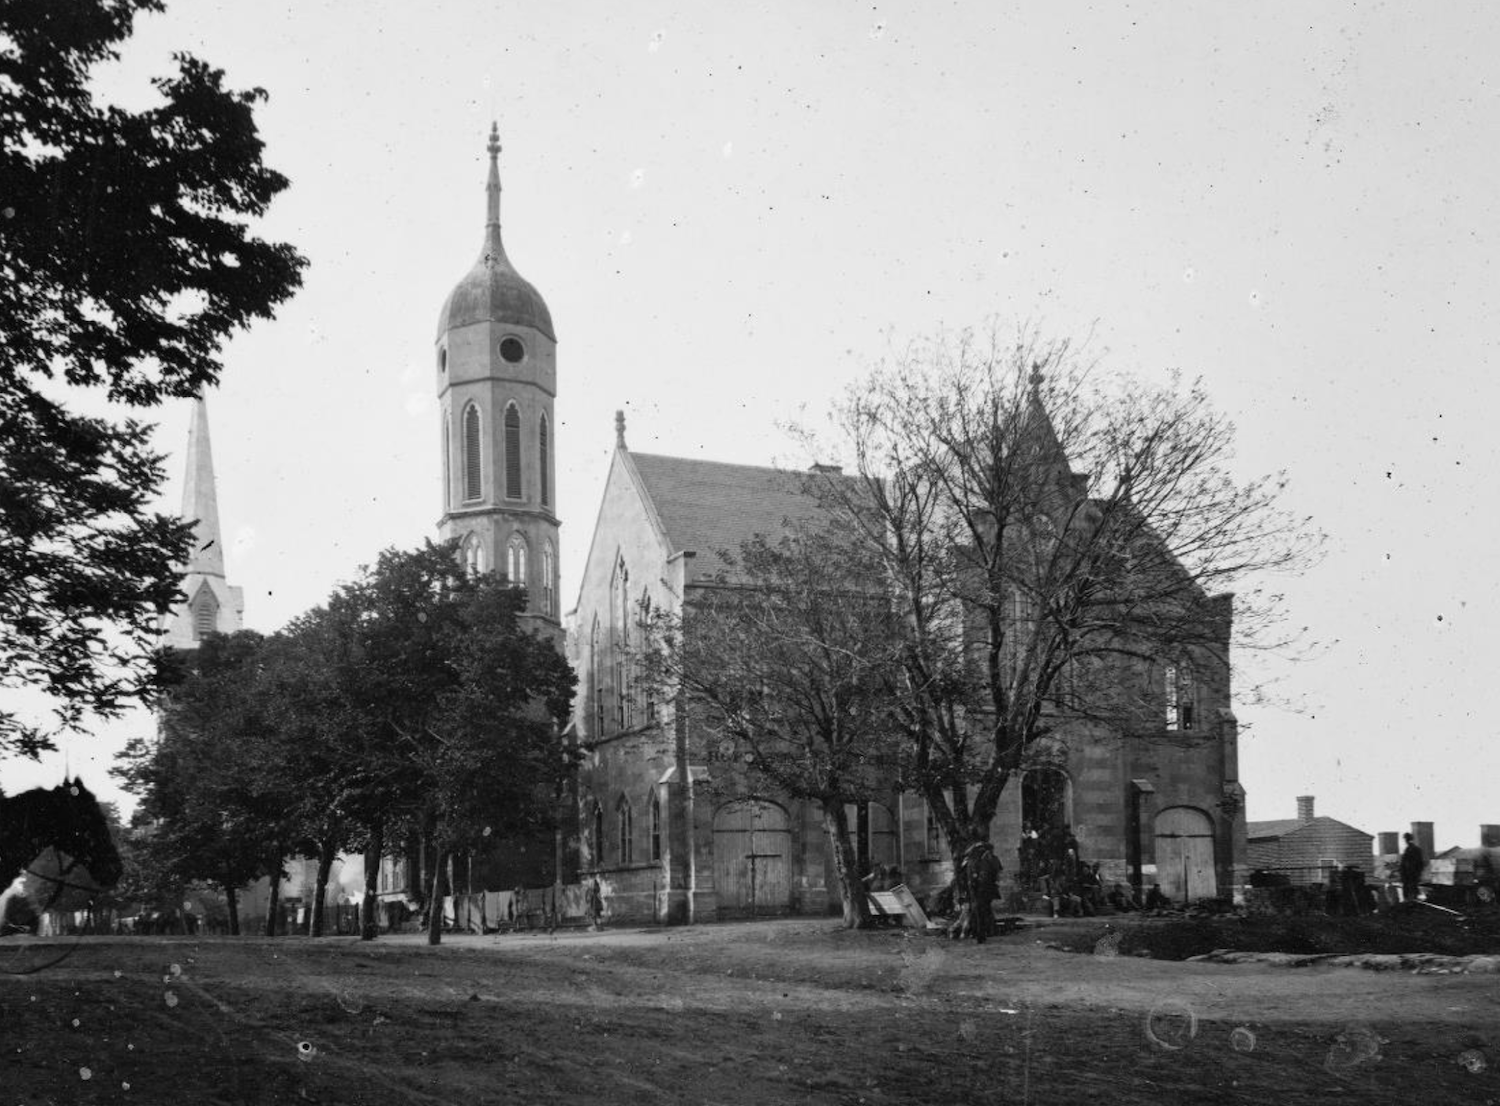 Photo of the Renwick Courthouse circa 1865